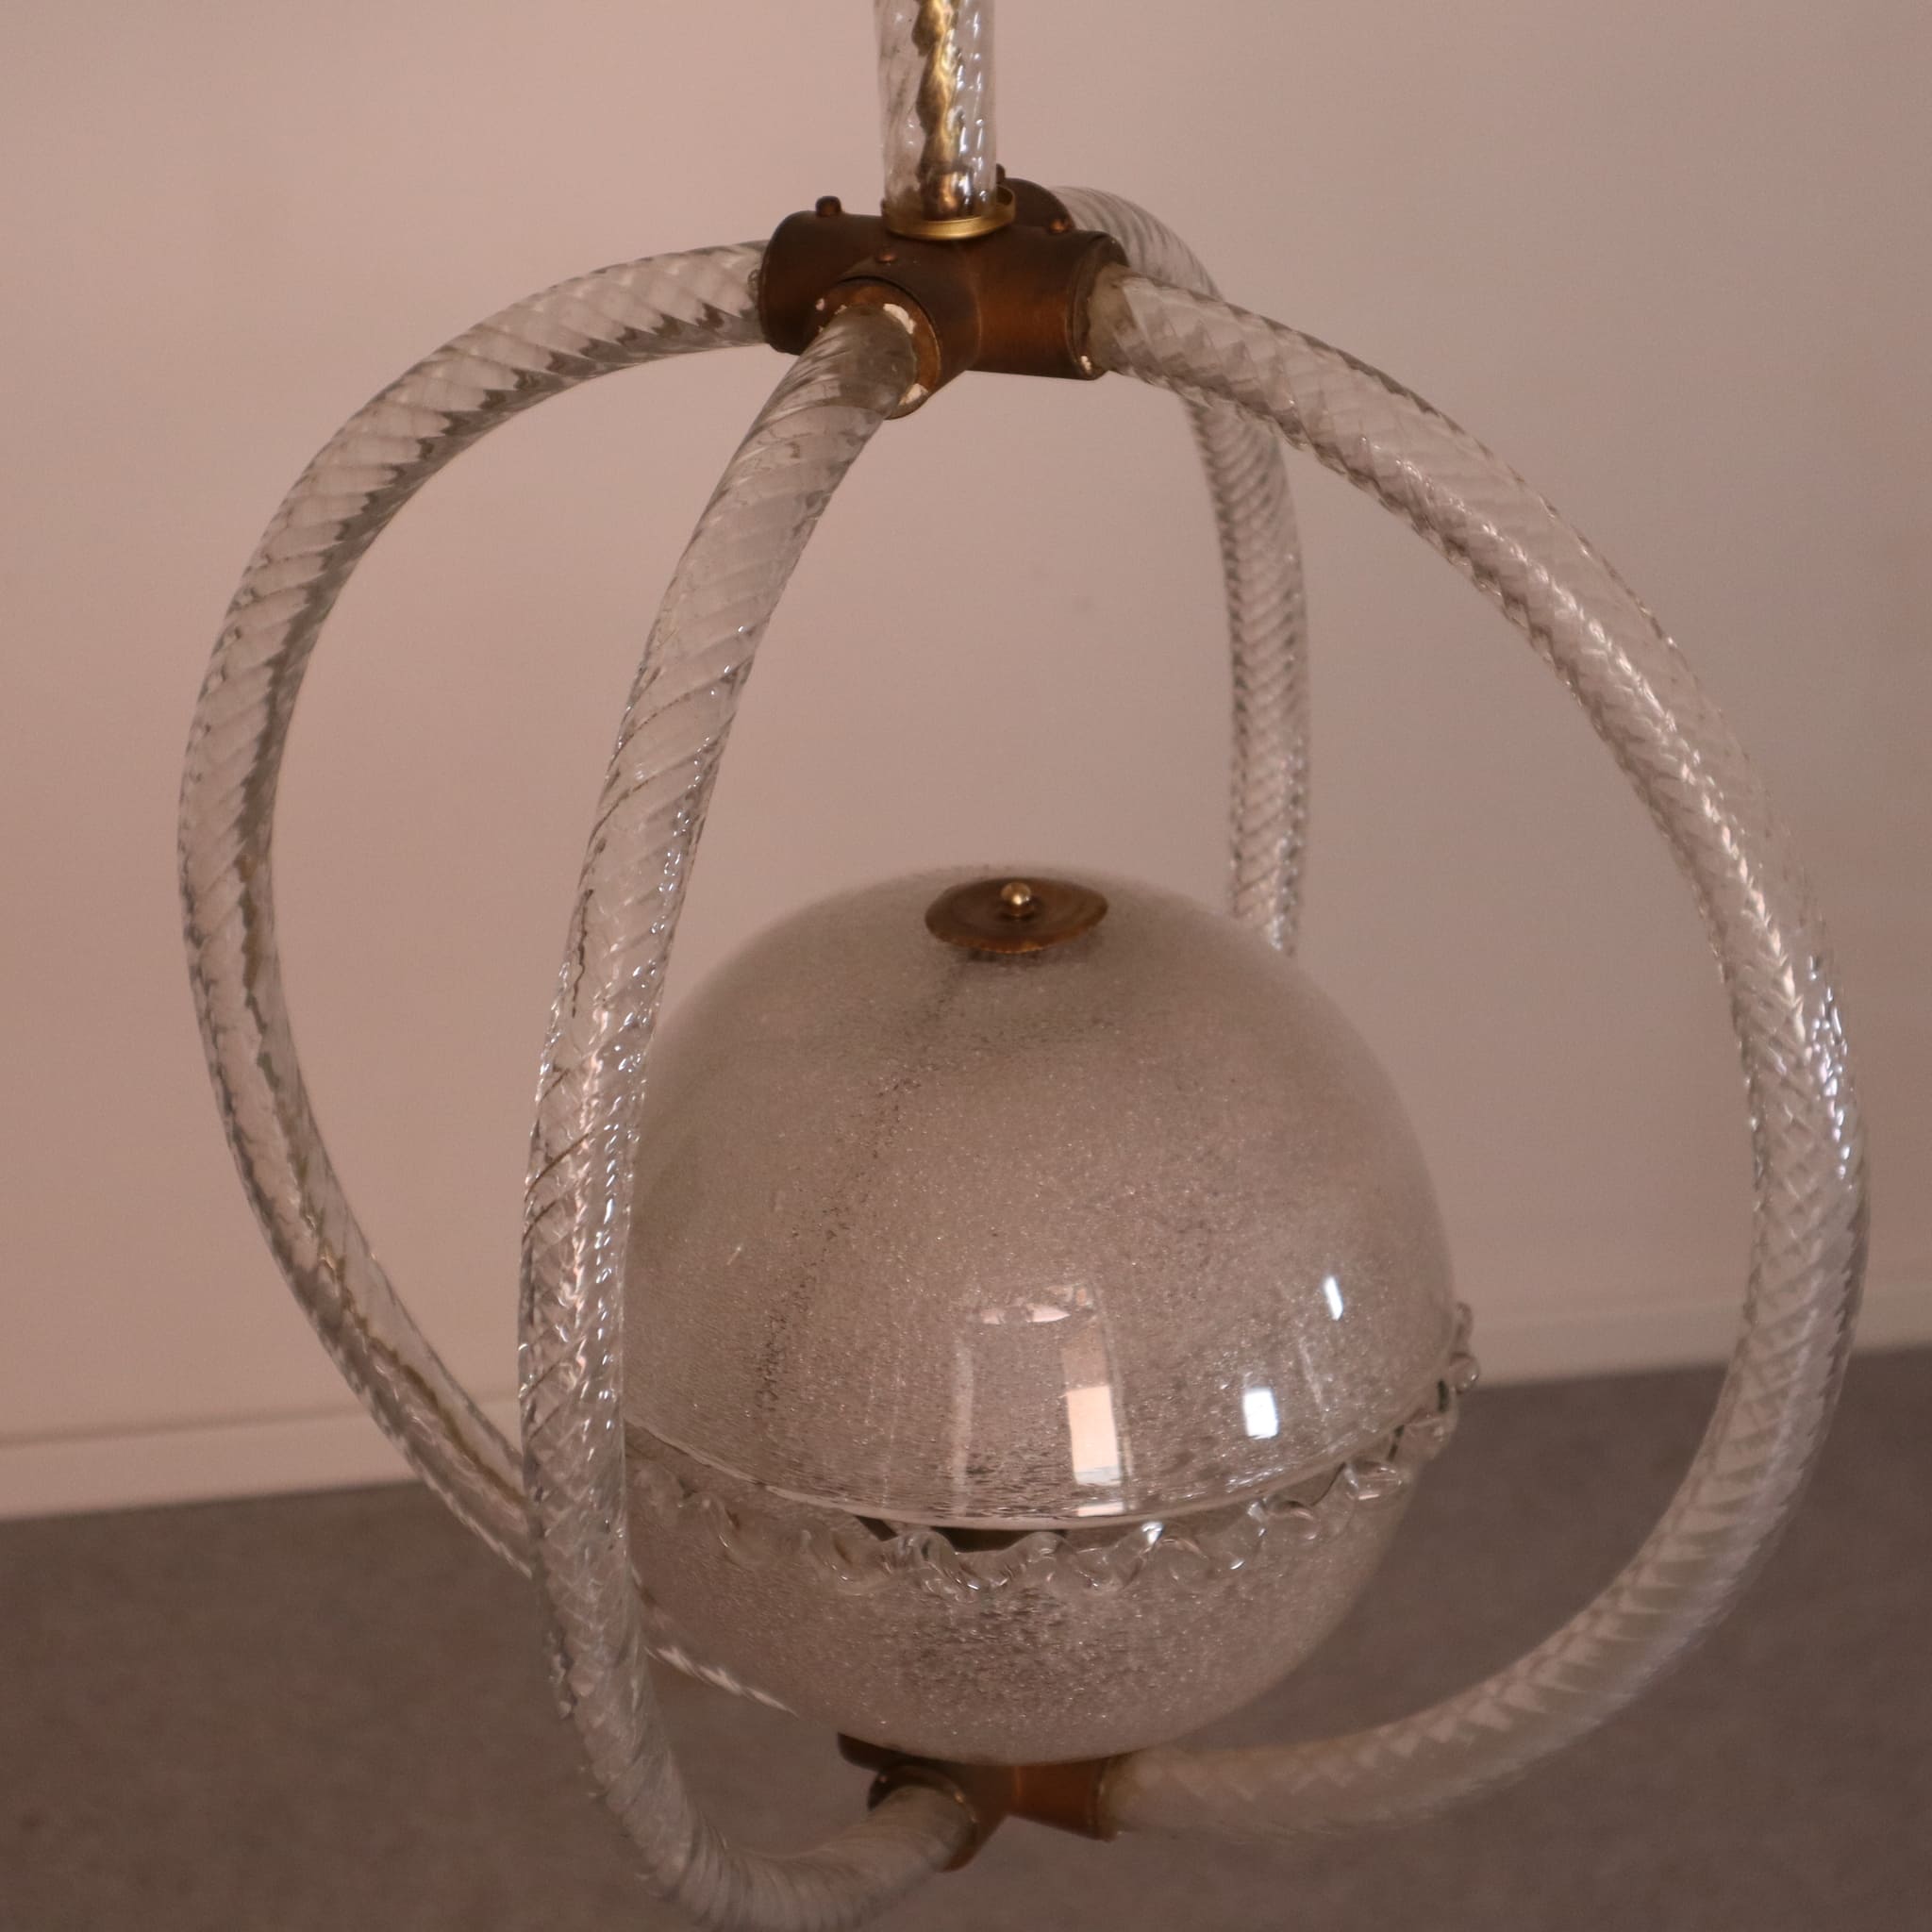 visionidepoca-visioni-depoca-chandelier-barovier-toso-1940-art-deco-murano-glass-rare-1-light-made-italy-lighting-furniture-vintage-design-5